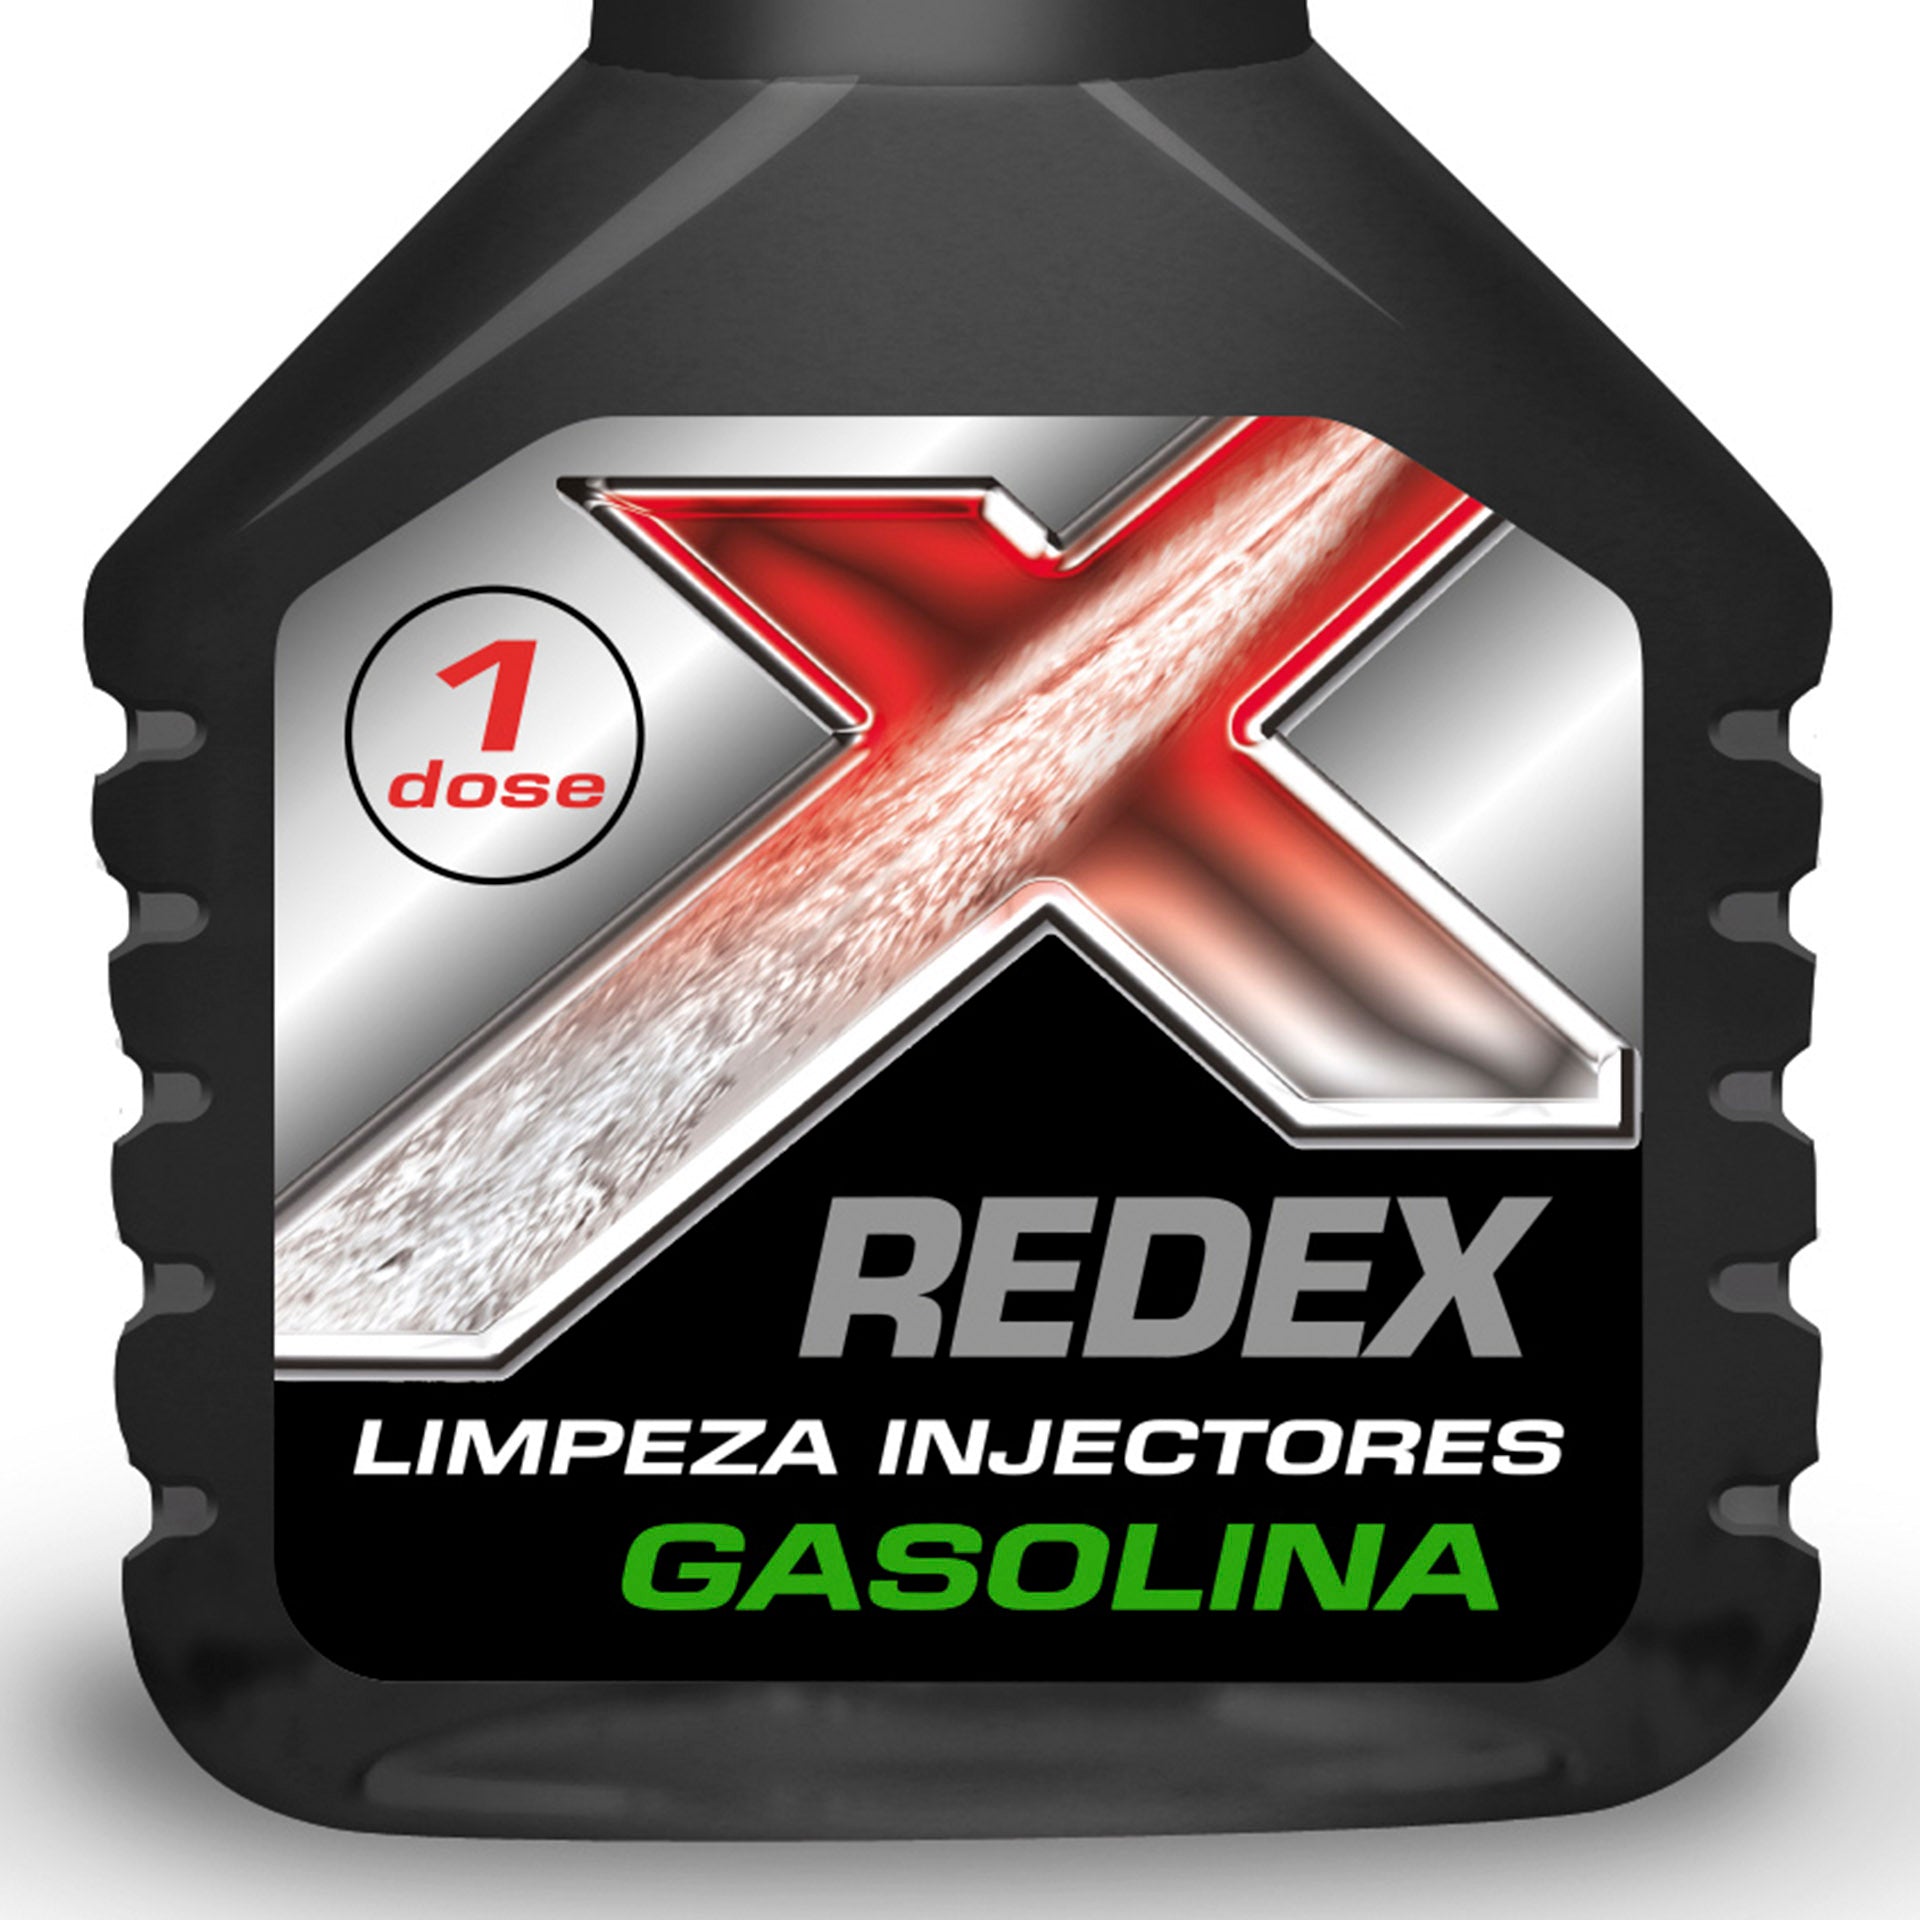 Redex Limpeza injectores gasolina 250ml